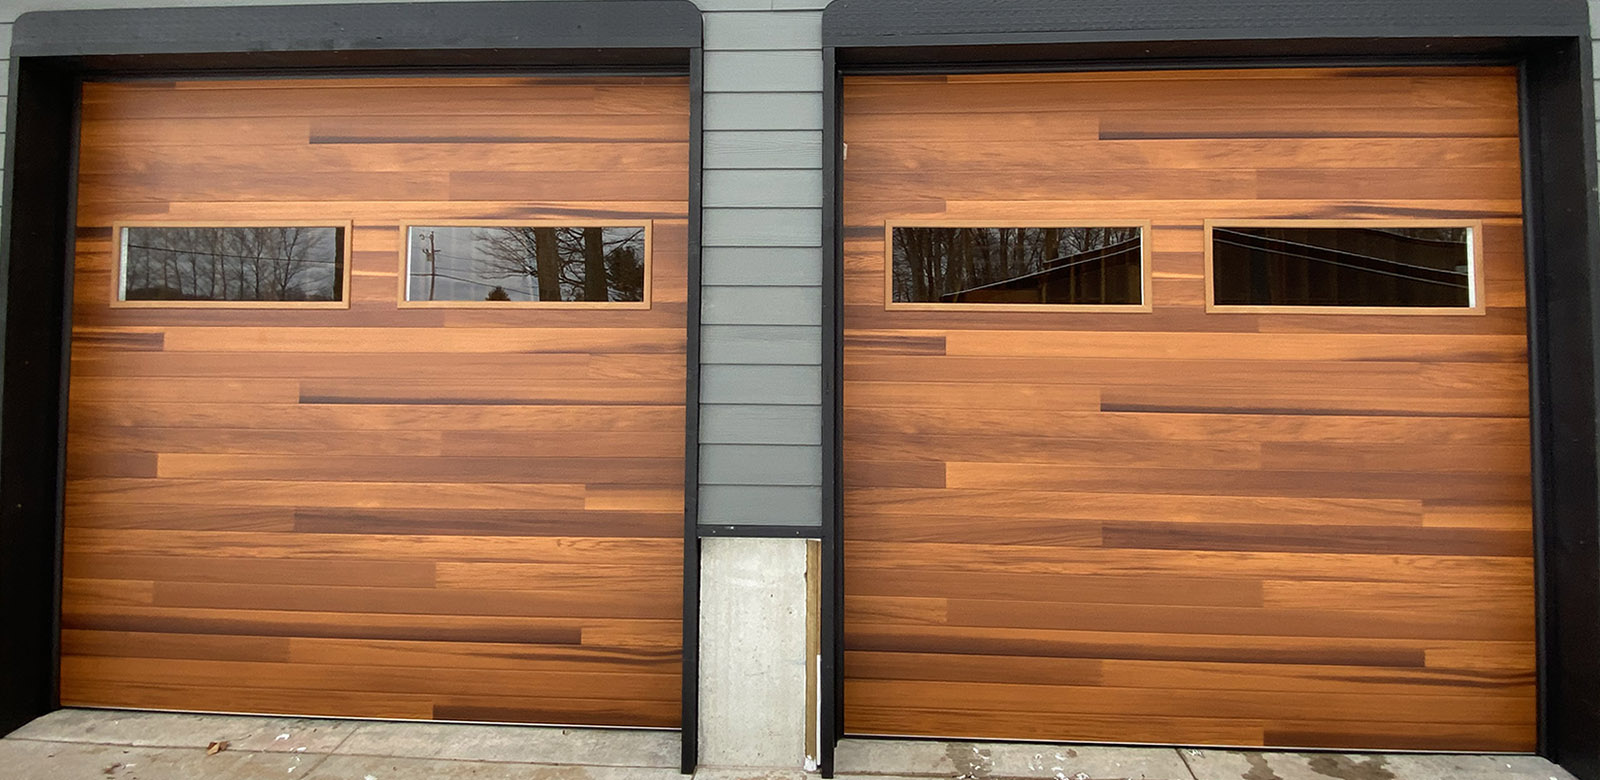  Garage Door Companies Traverse City with Simple Decor